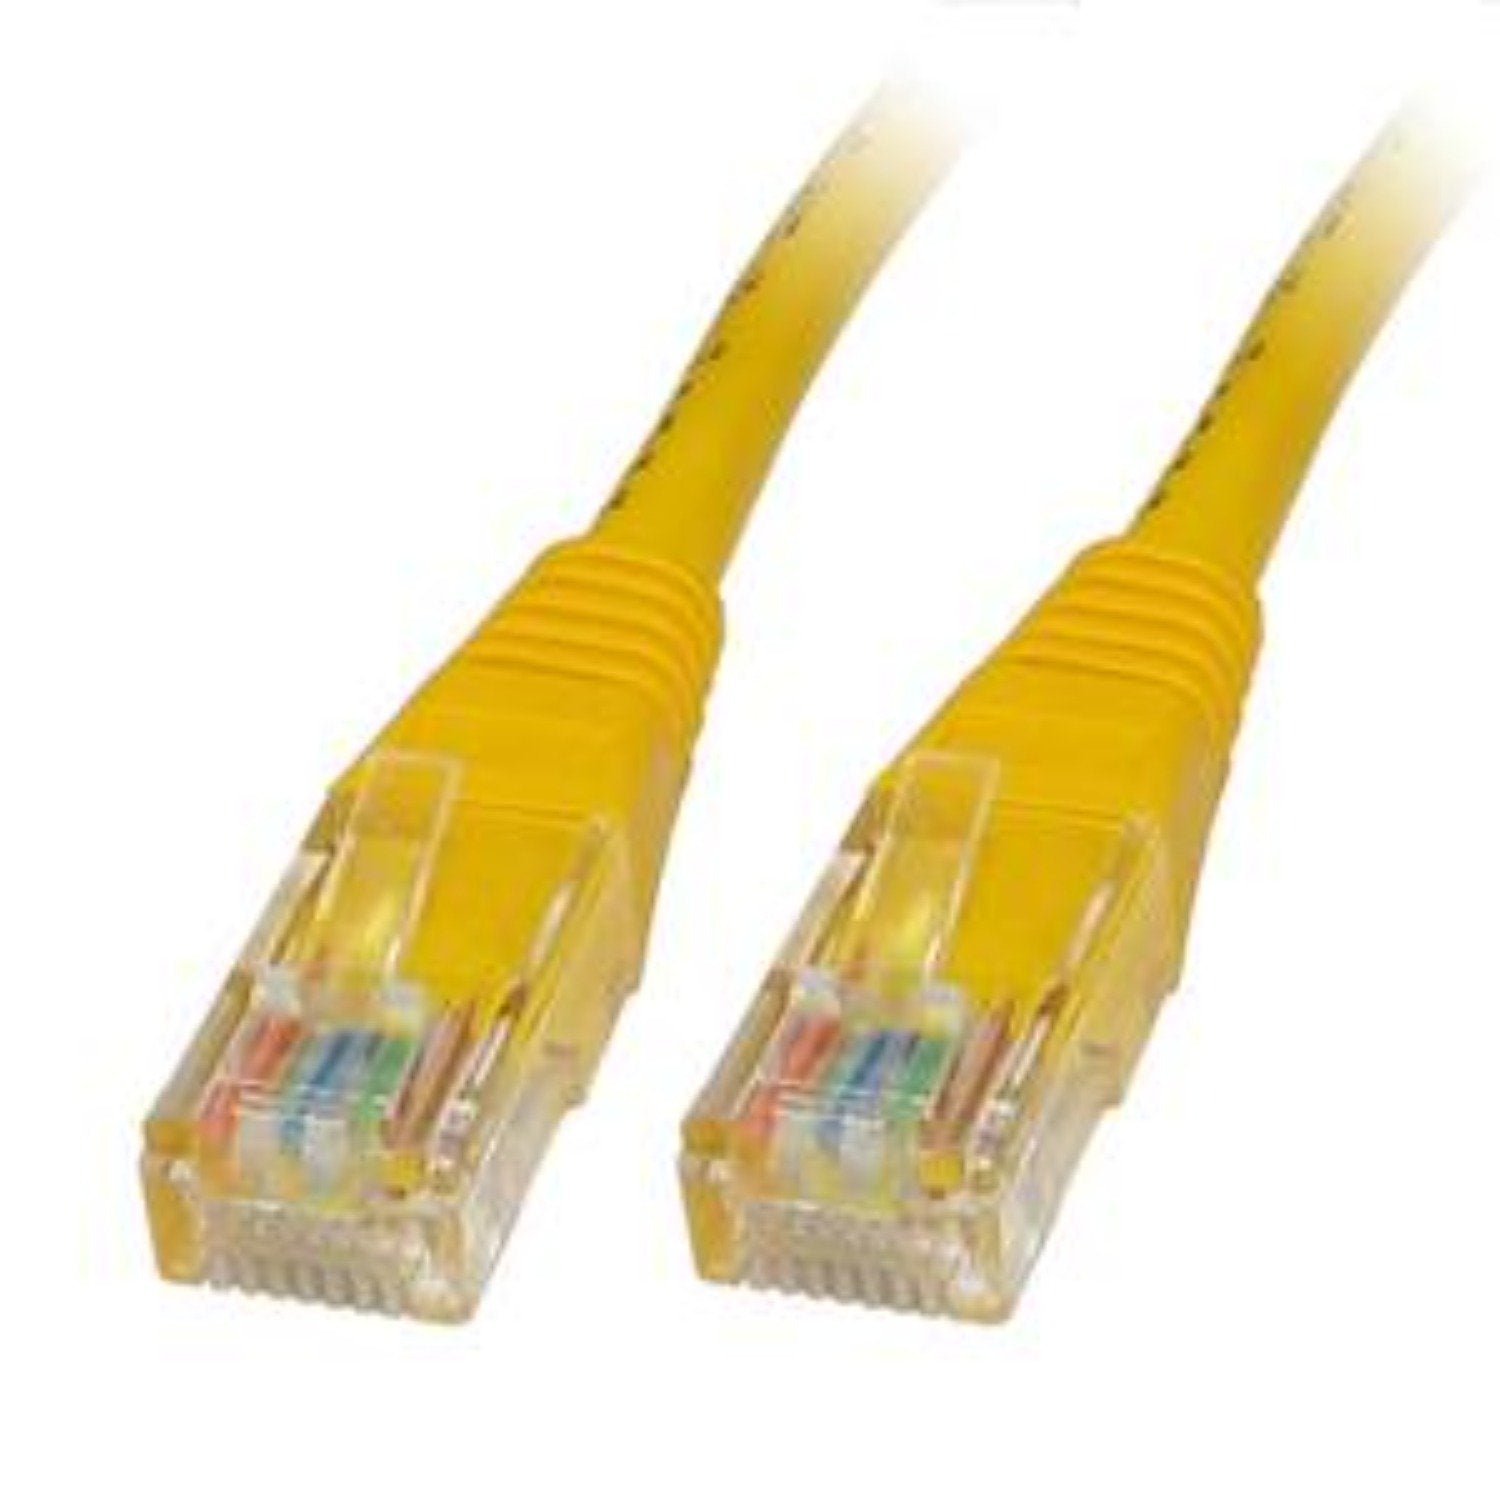 cable rj45 cat 5e 20m yellow